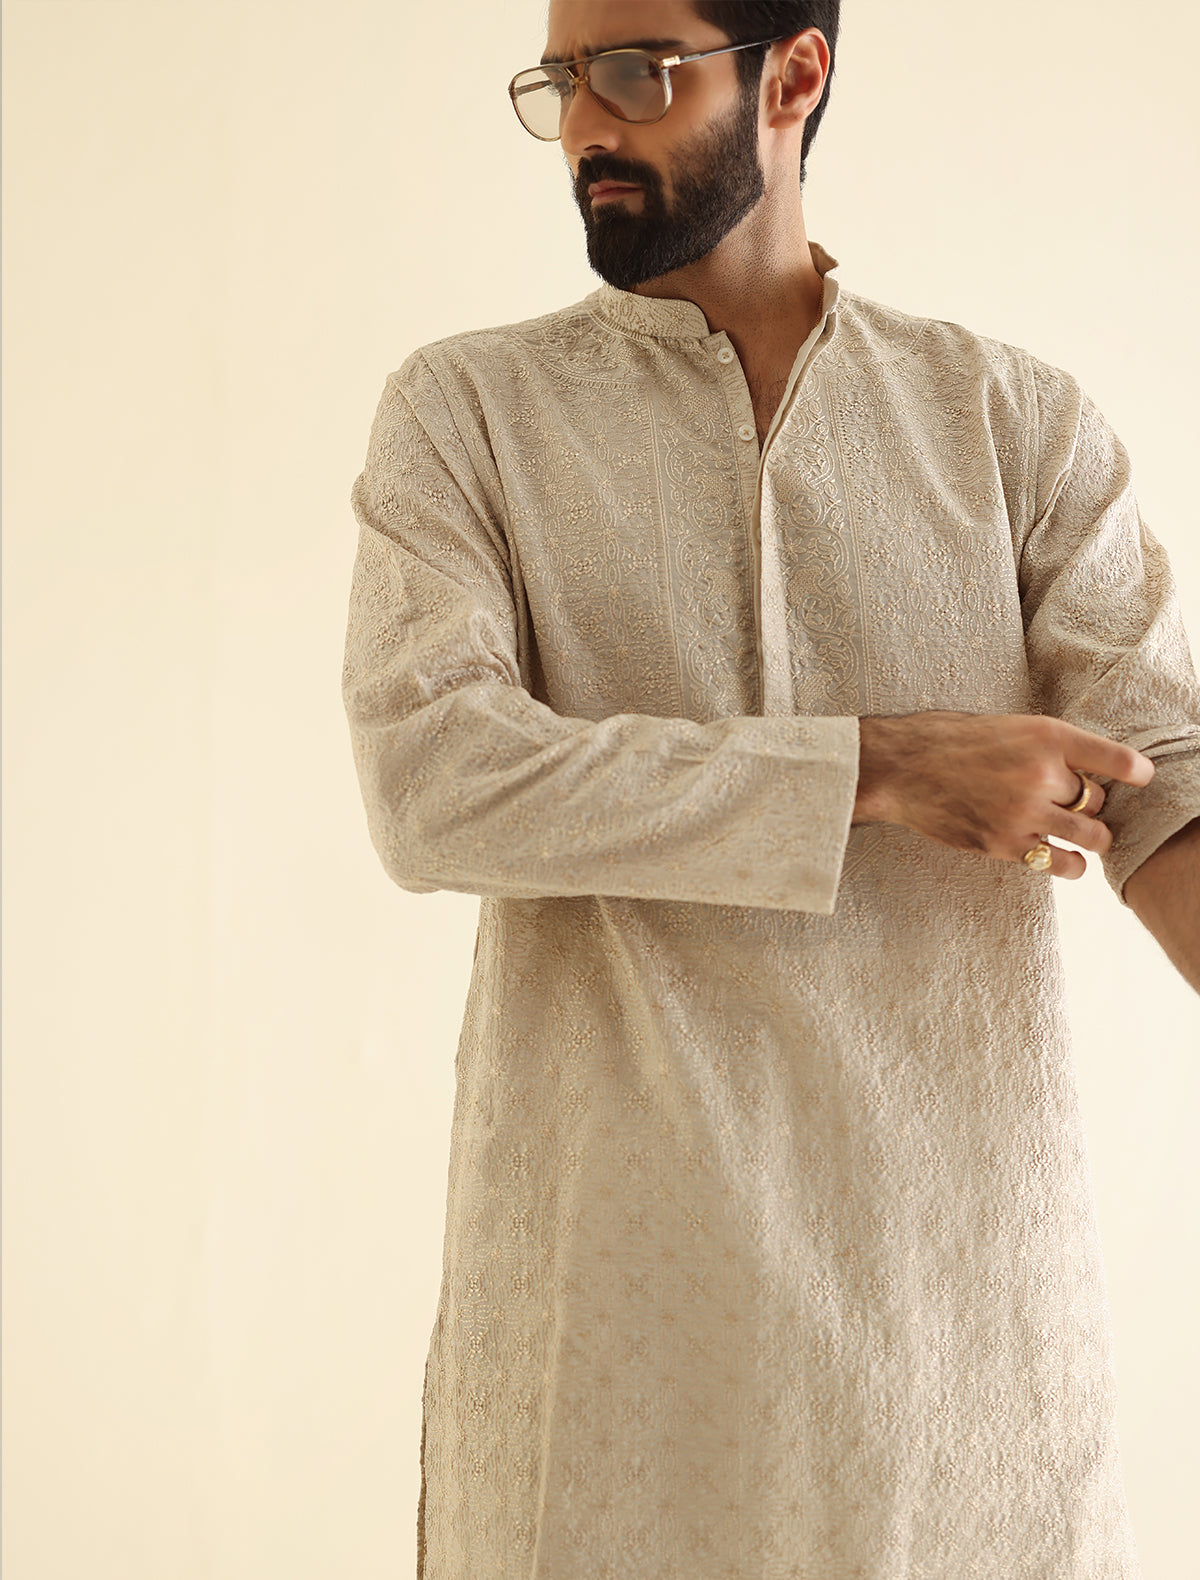 Pakistani Menswear | Ismail Farid - BEIGE HEAVY EMBROIDERED KURTA - Khanumjan  Pakistani Clothes and Designer Dresses in UK, USA 